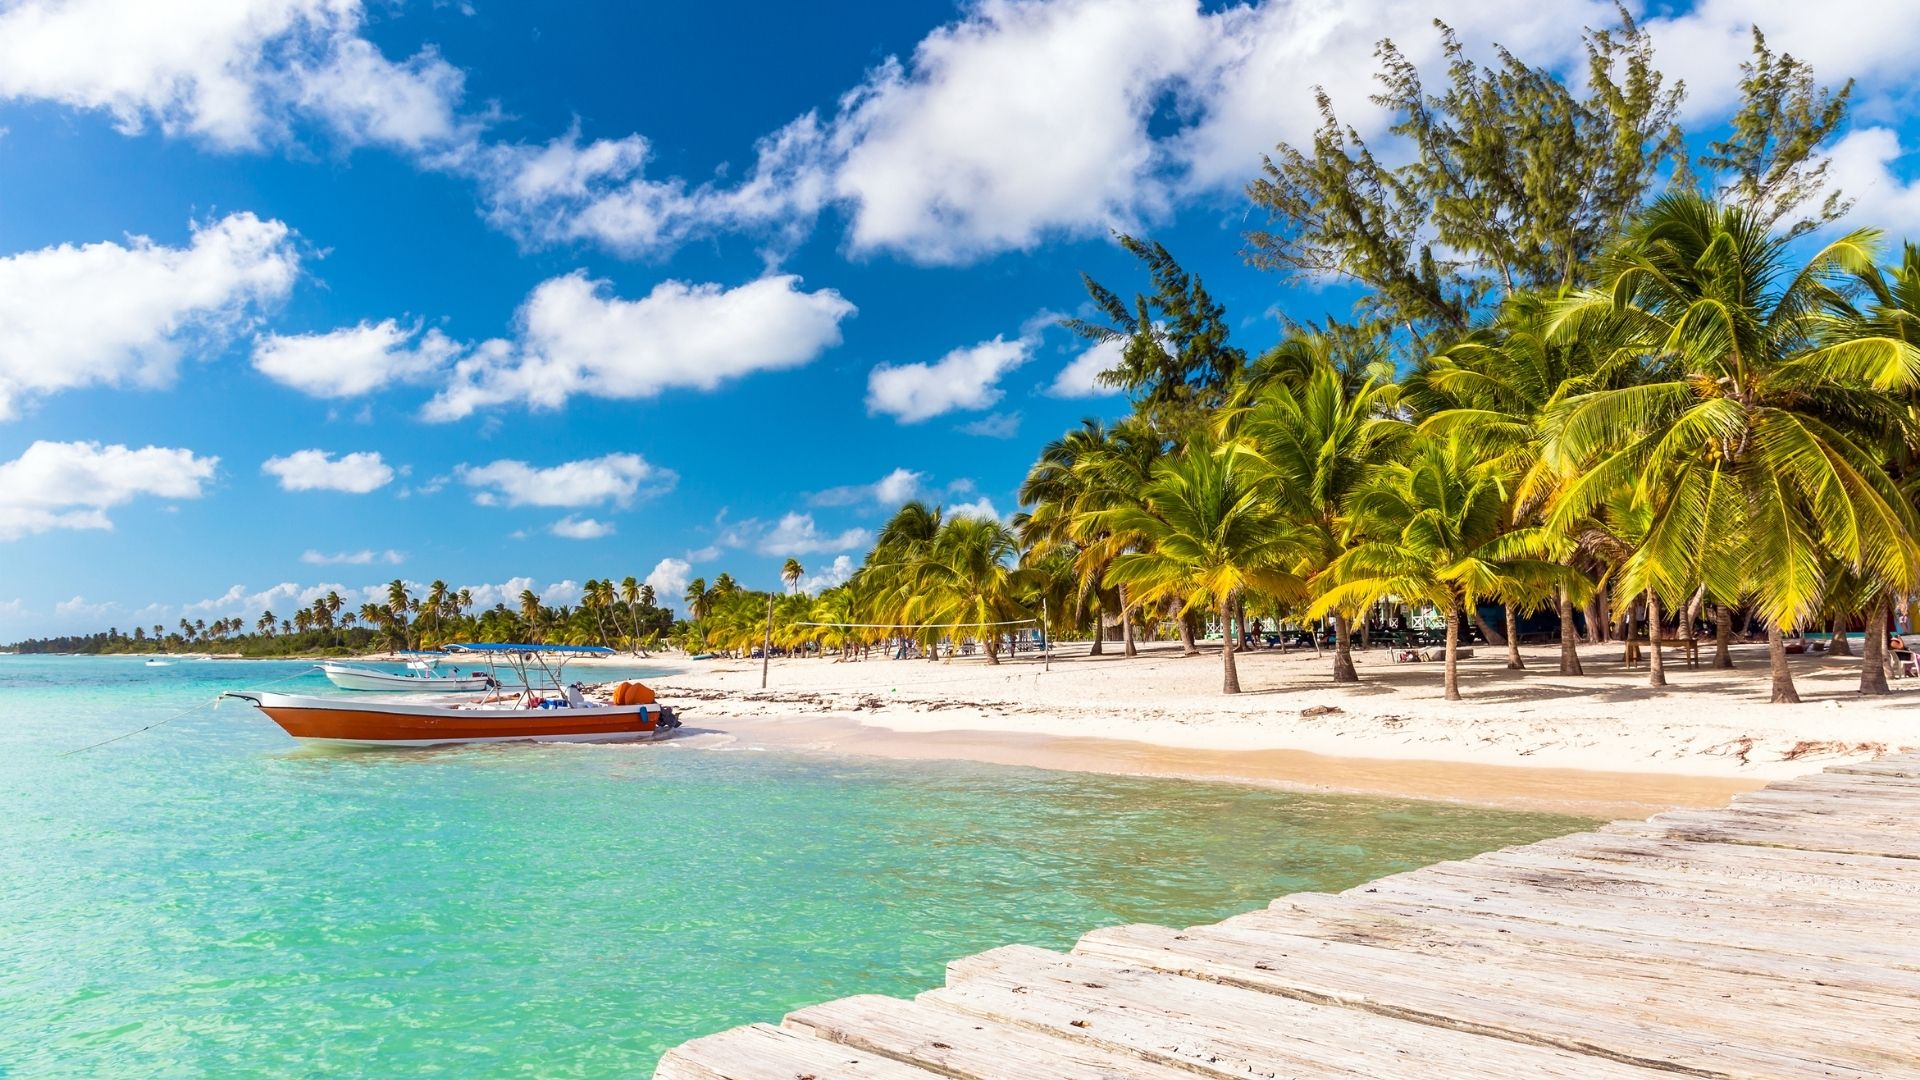 dominican republic tourism development